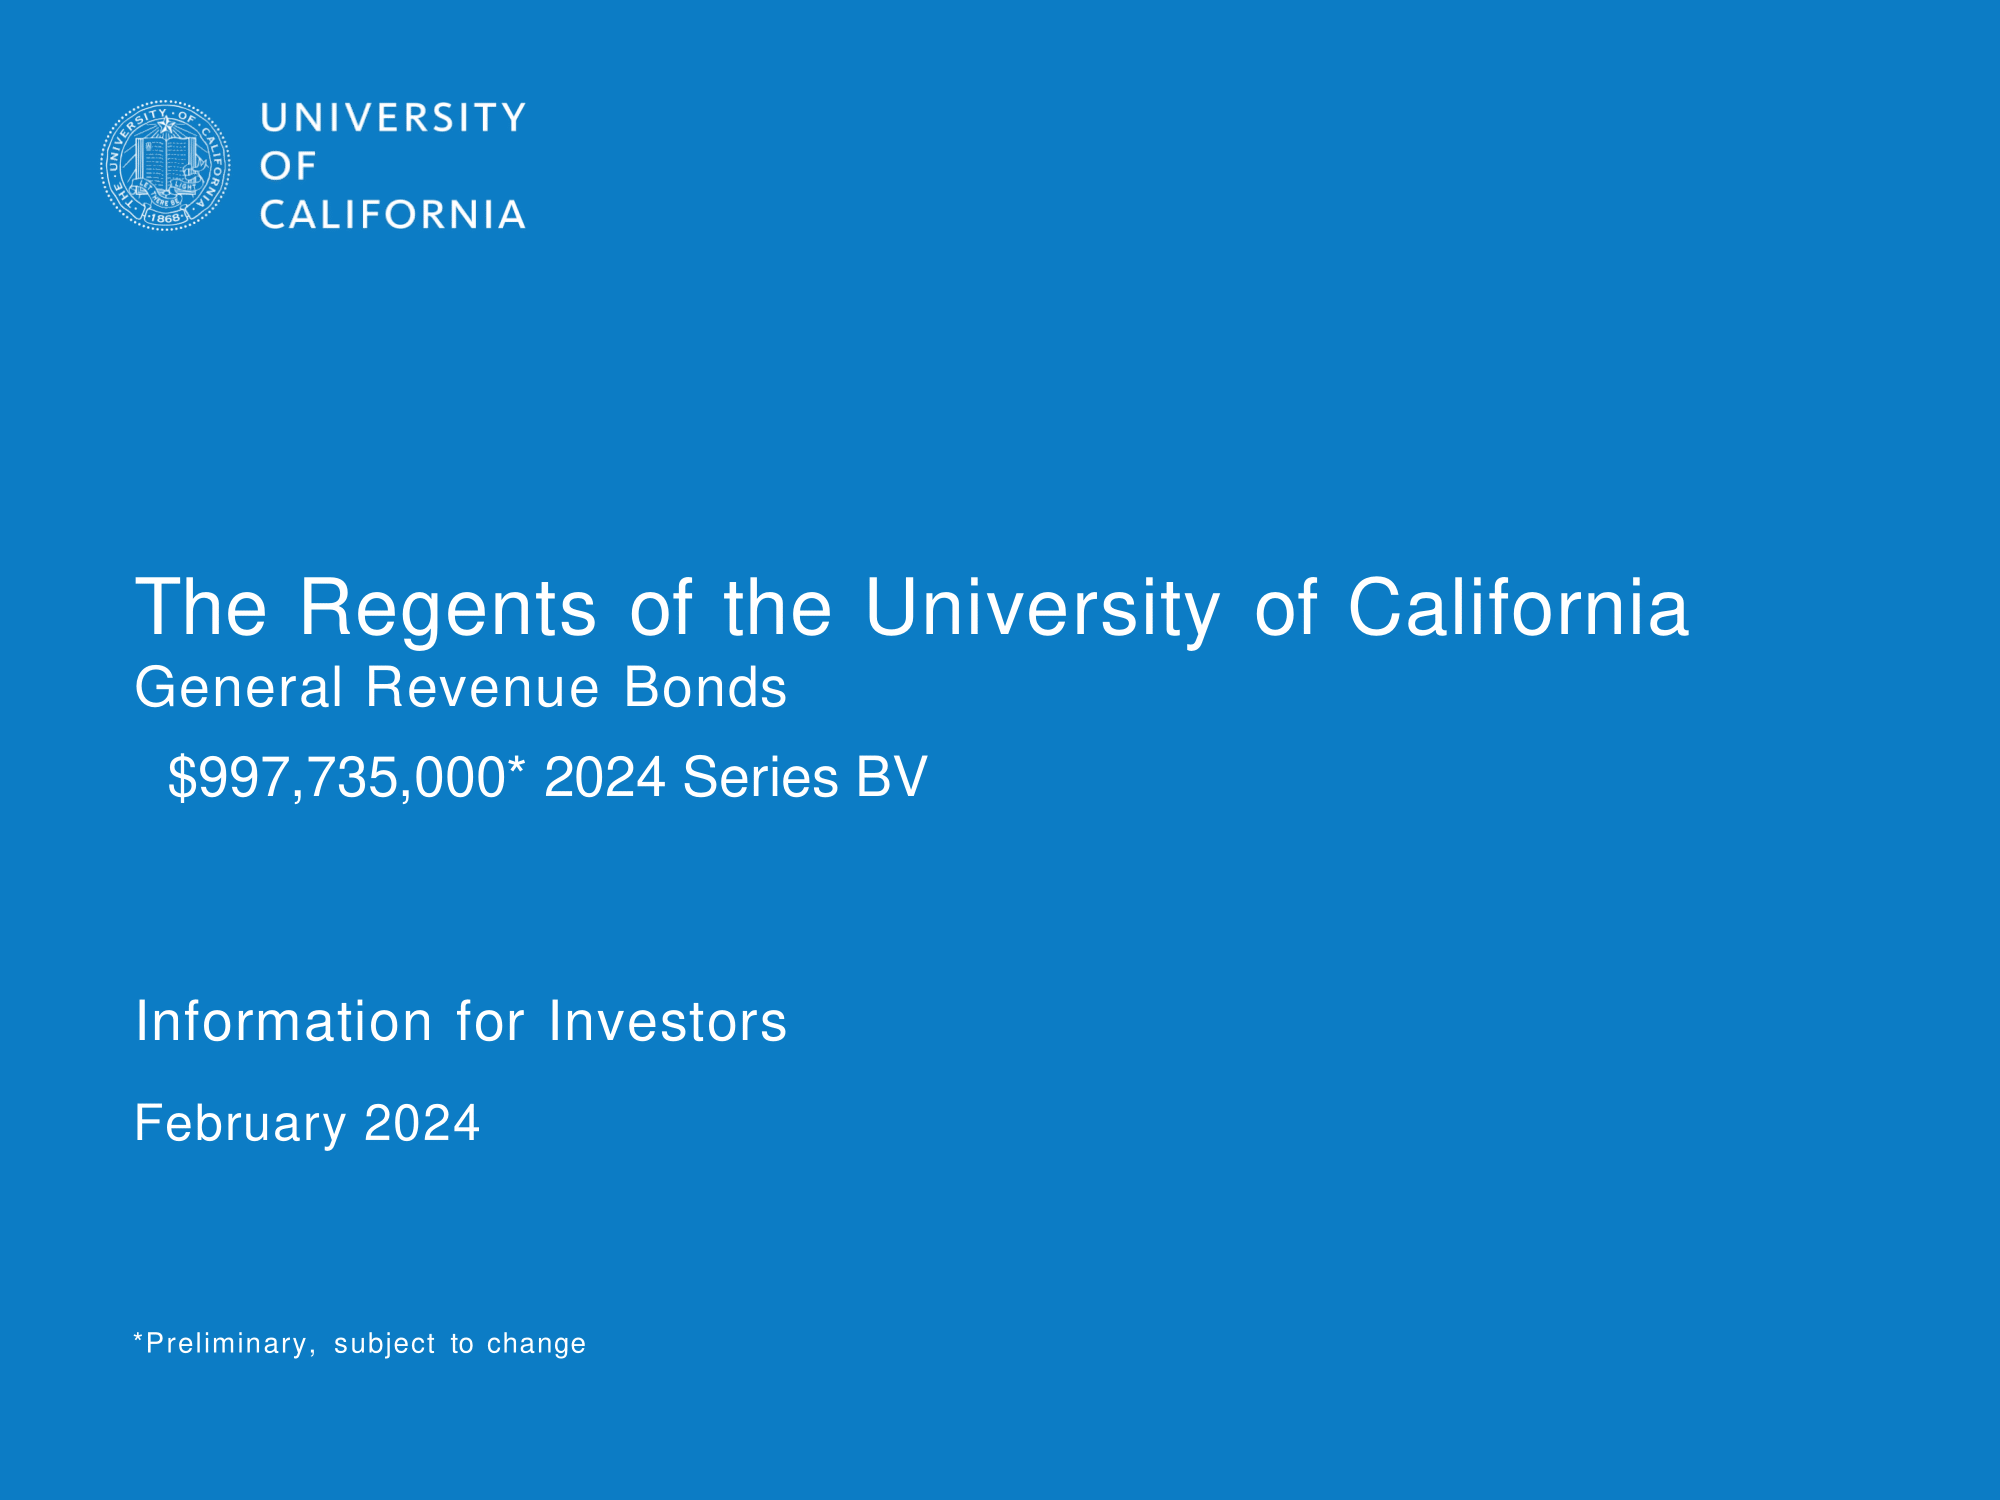 The Regents of the University of California, General Revenue Bonds, 2024 Series BV Information for Investors